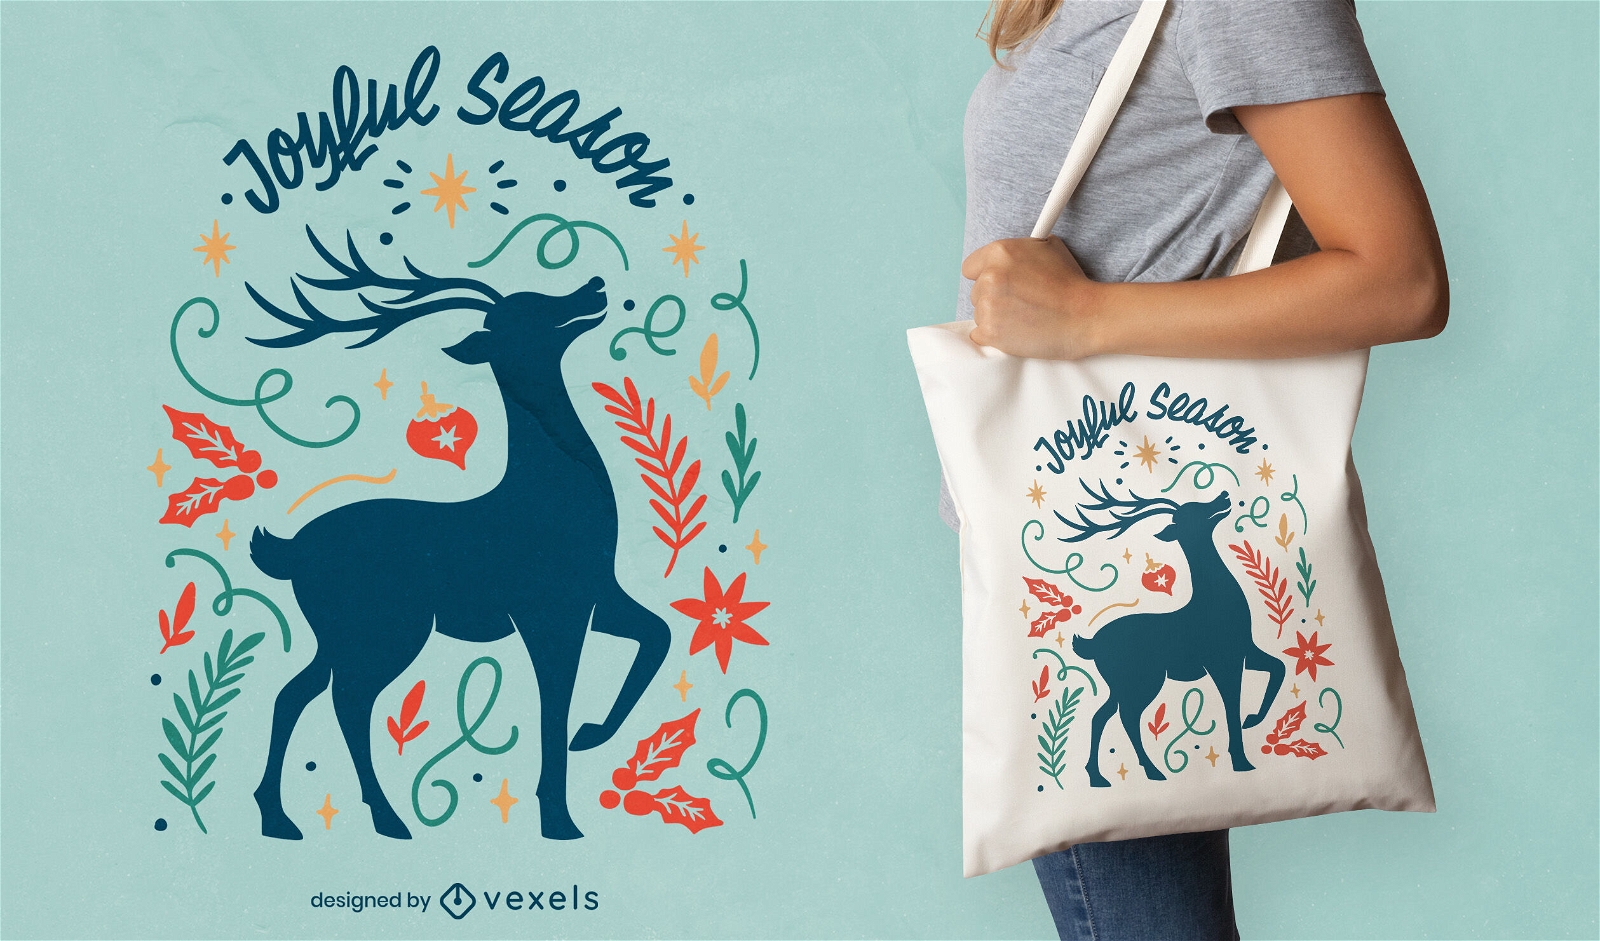 Joyful season reindeer tote bag design